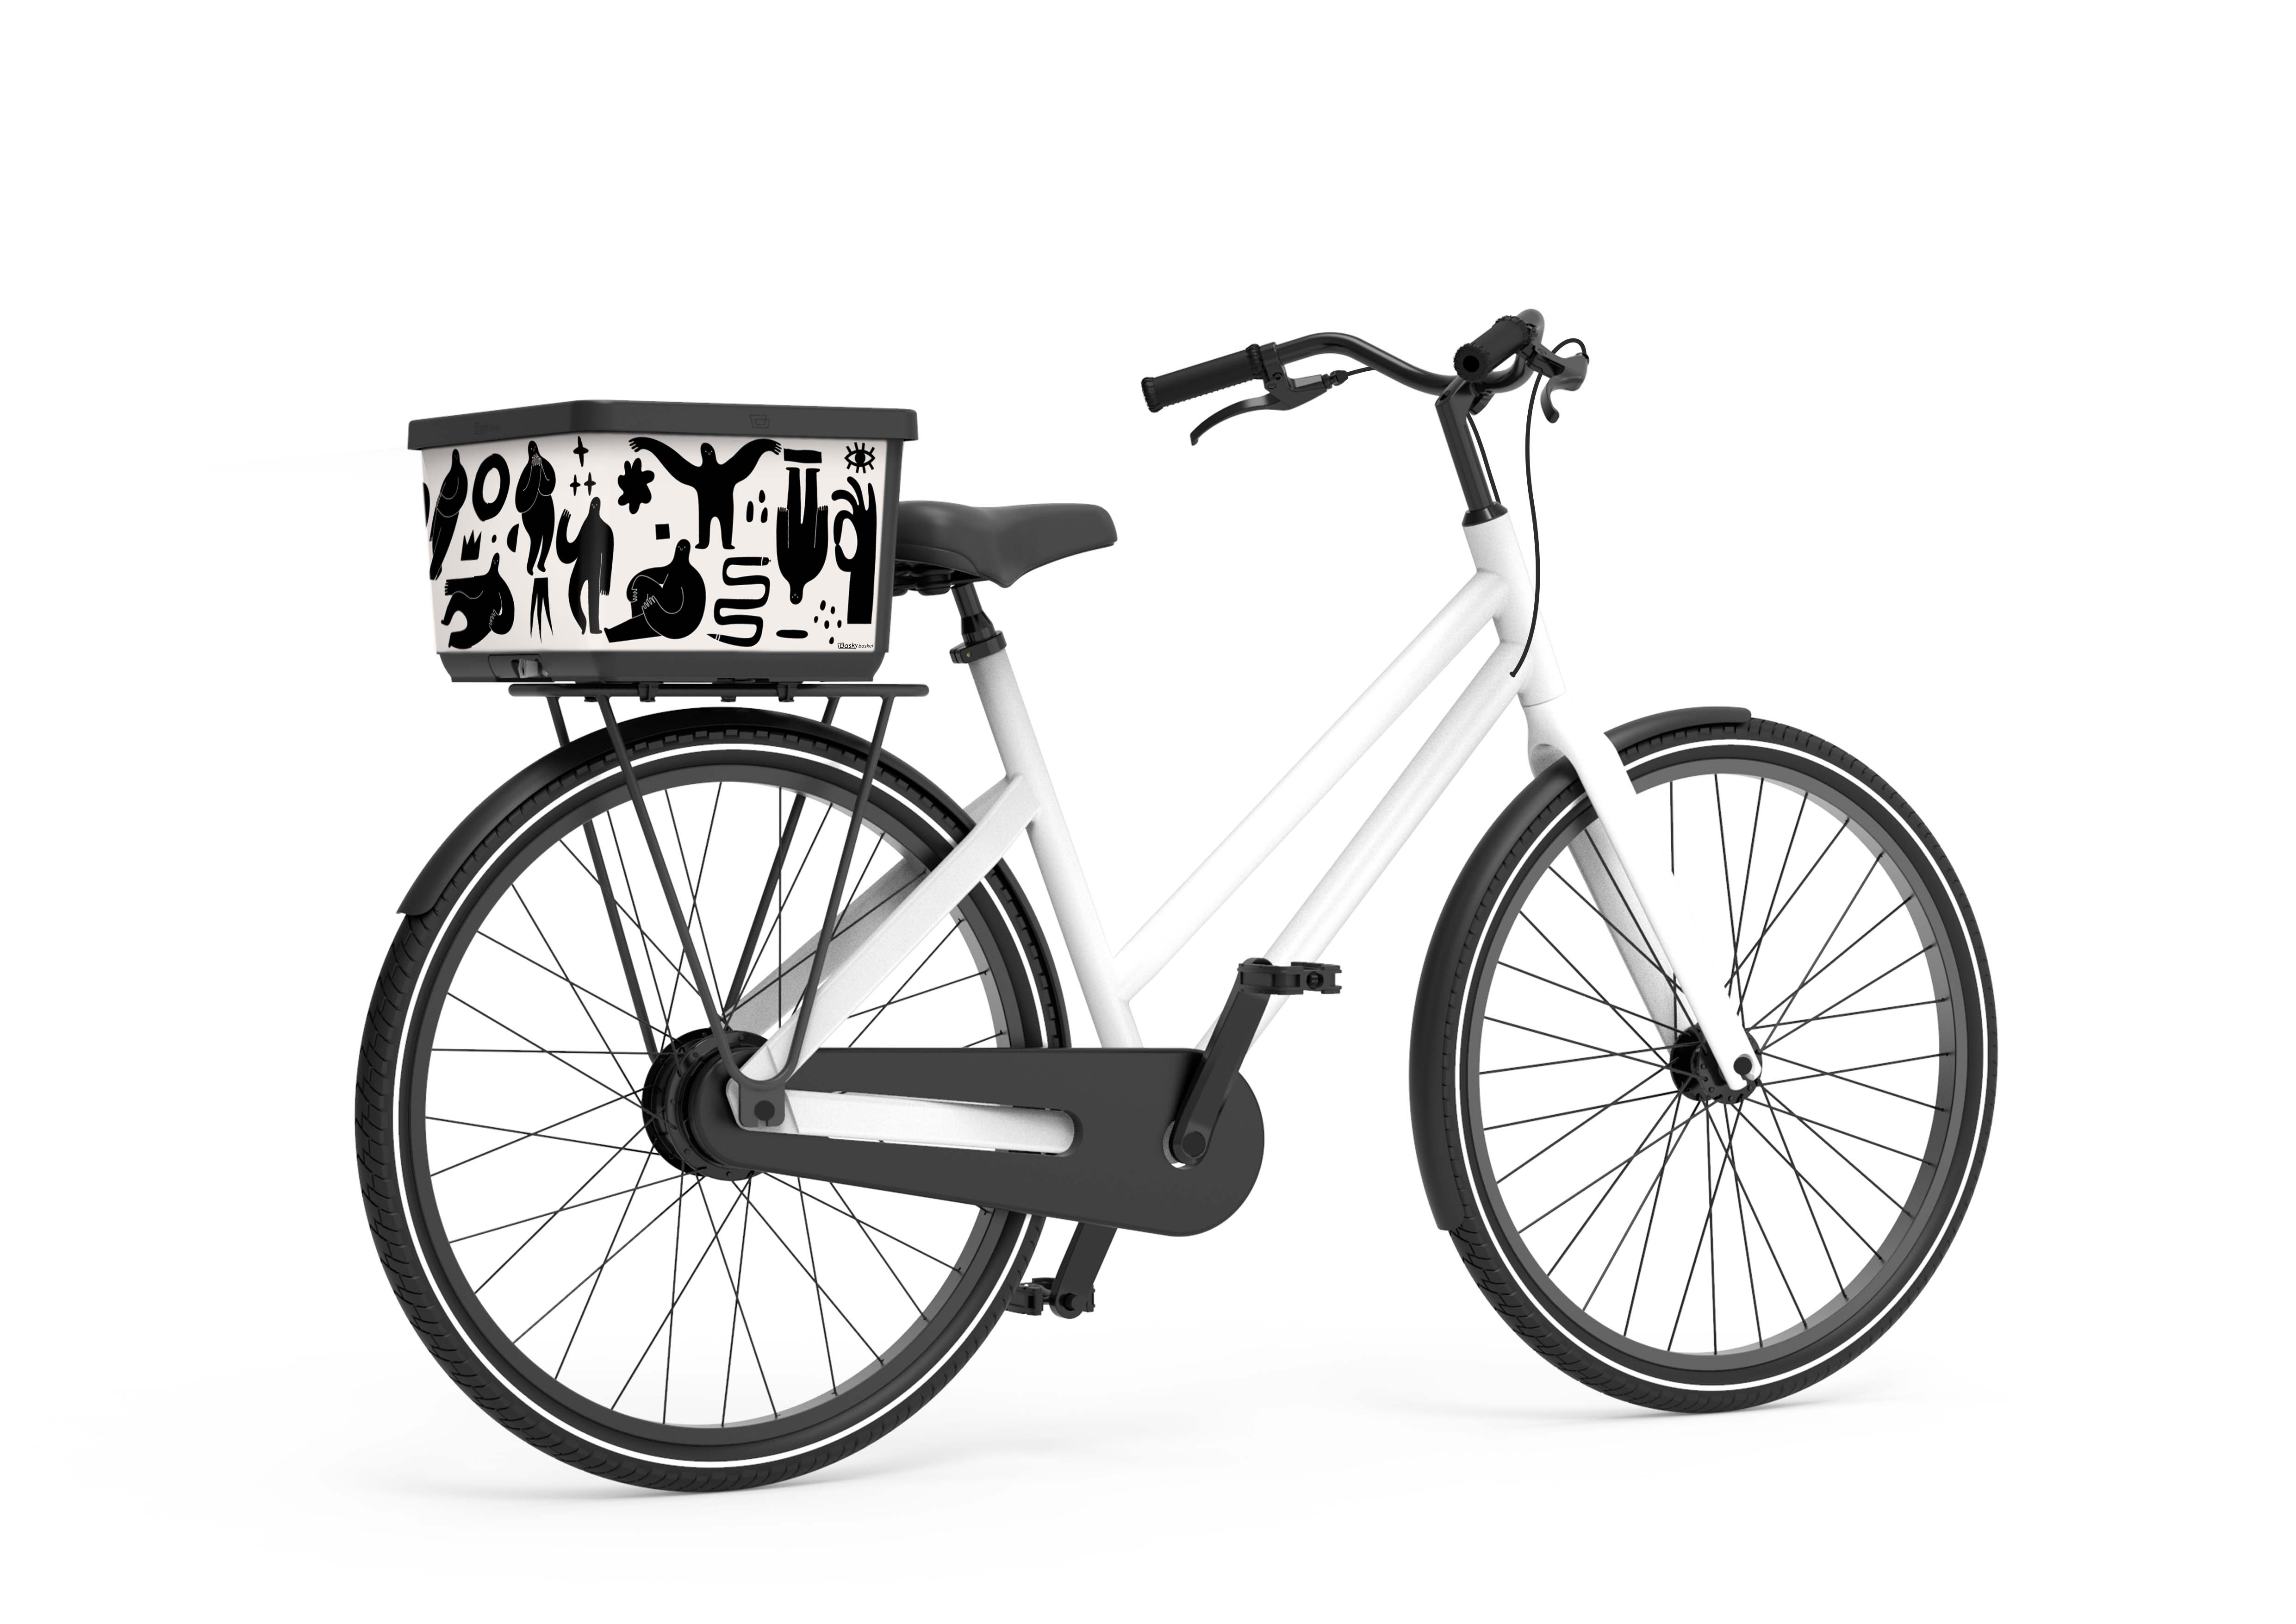 De Basky + inclusief kliksysteem voor jouw fiets (t.w.v. € 18,95)